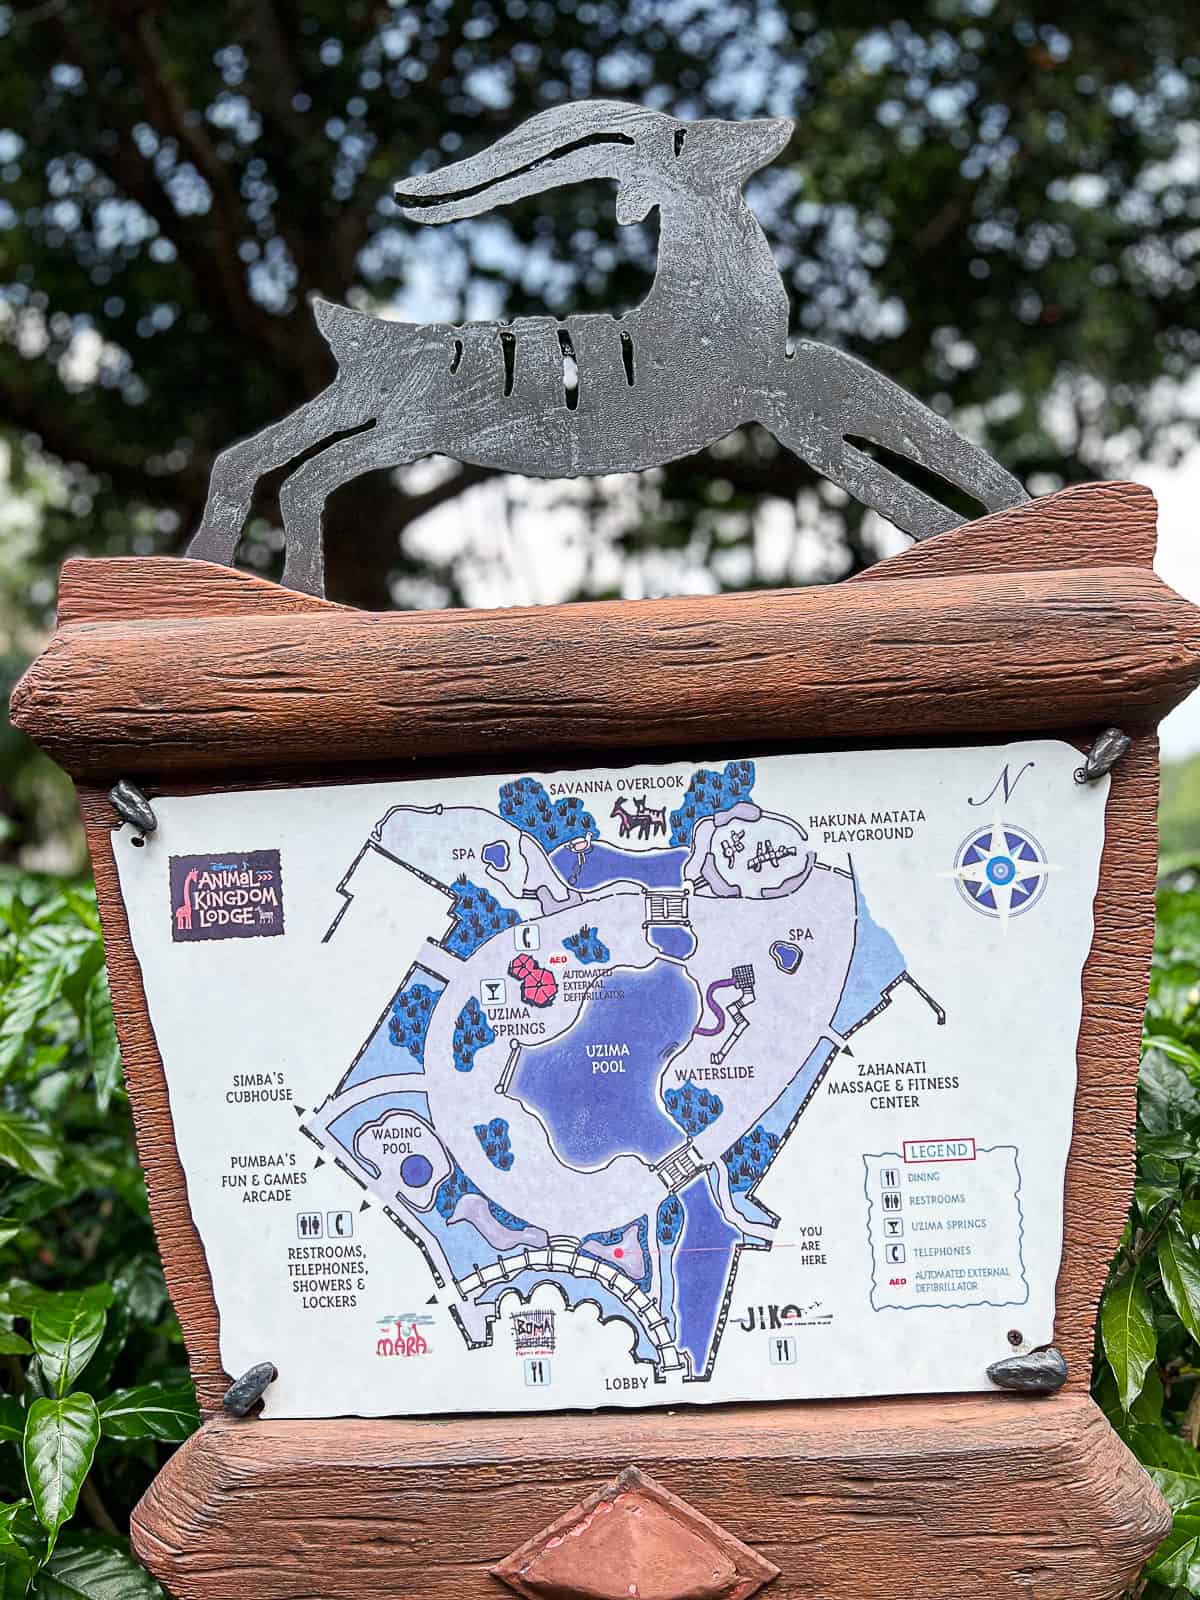 Map With Uzima Pool at Animal Kingdom Jambo House in Walt Disney World